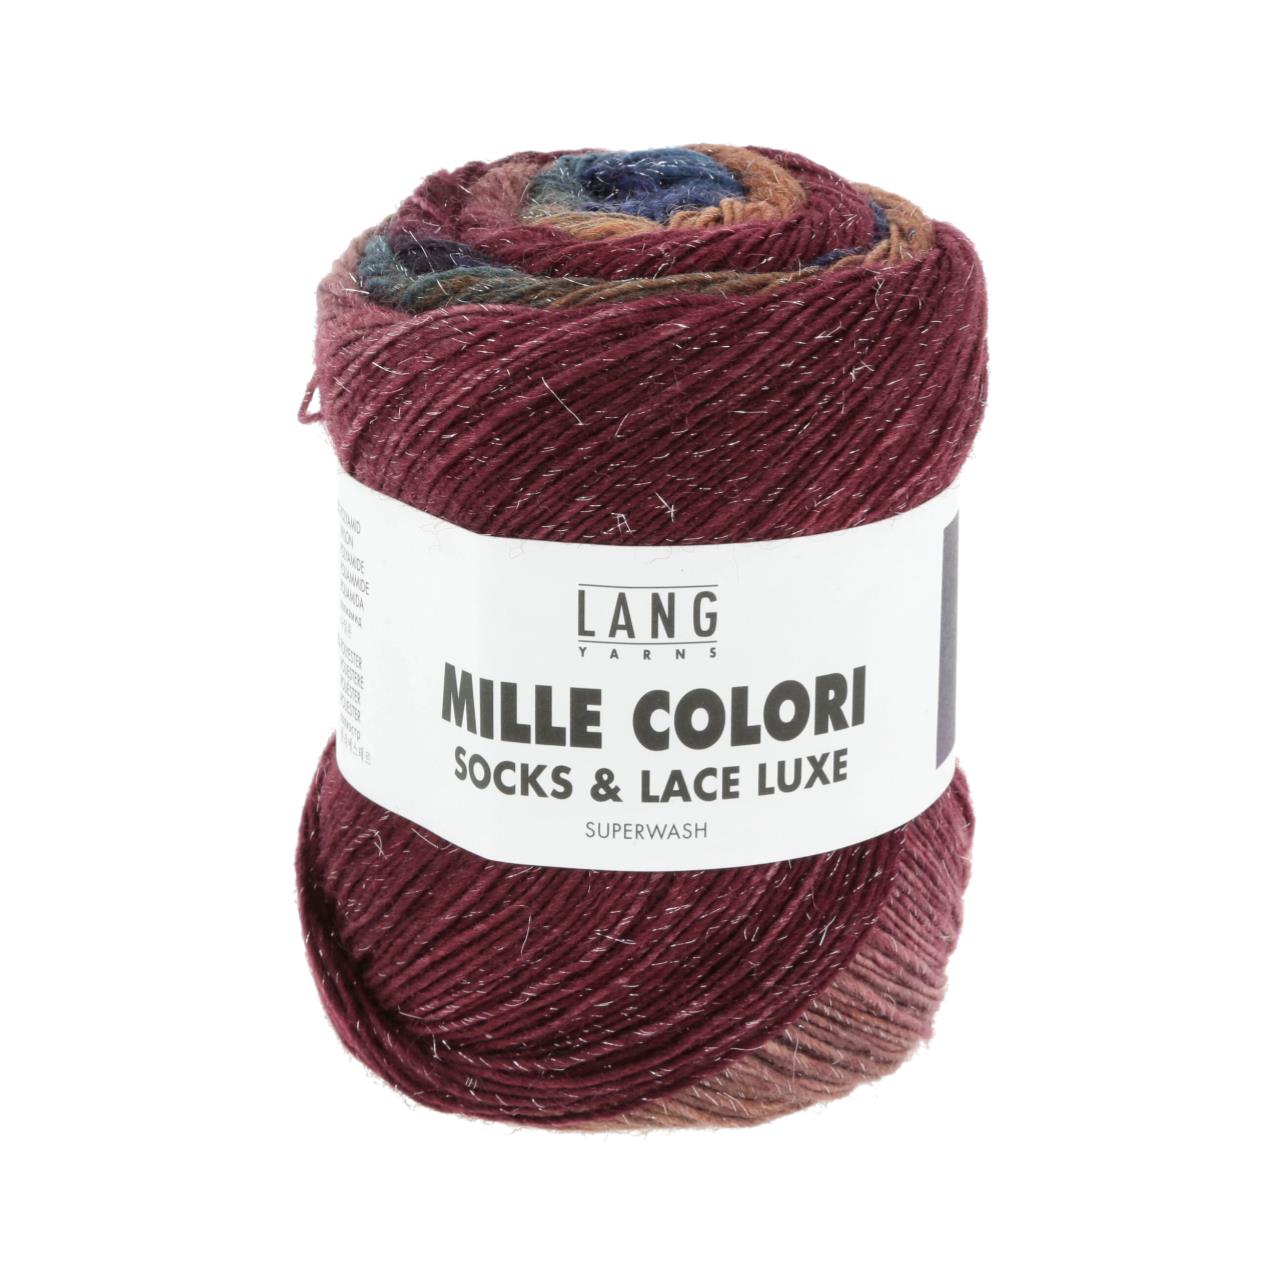 Mille Colori Socks & Lace Luxe 214 Navy/Violett/Braun